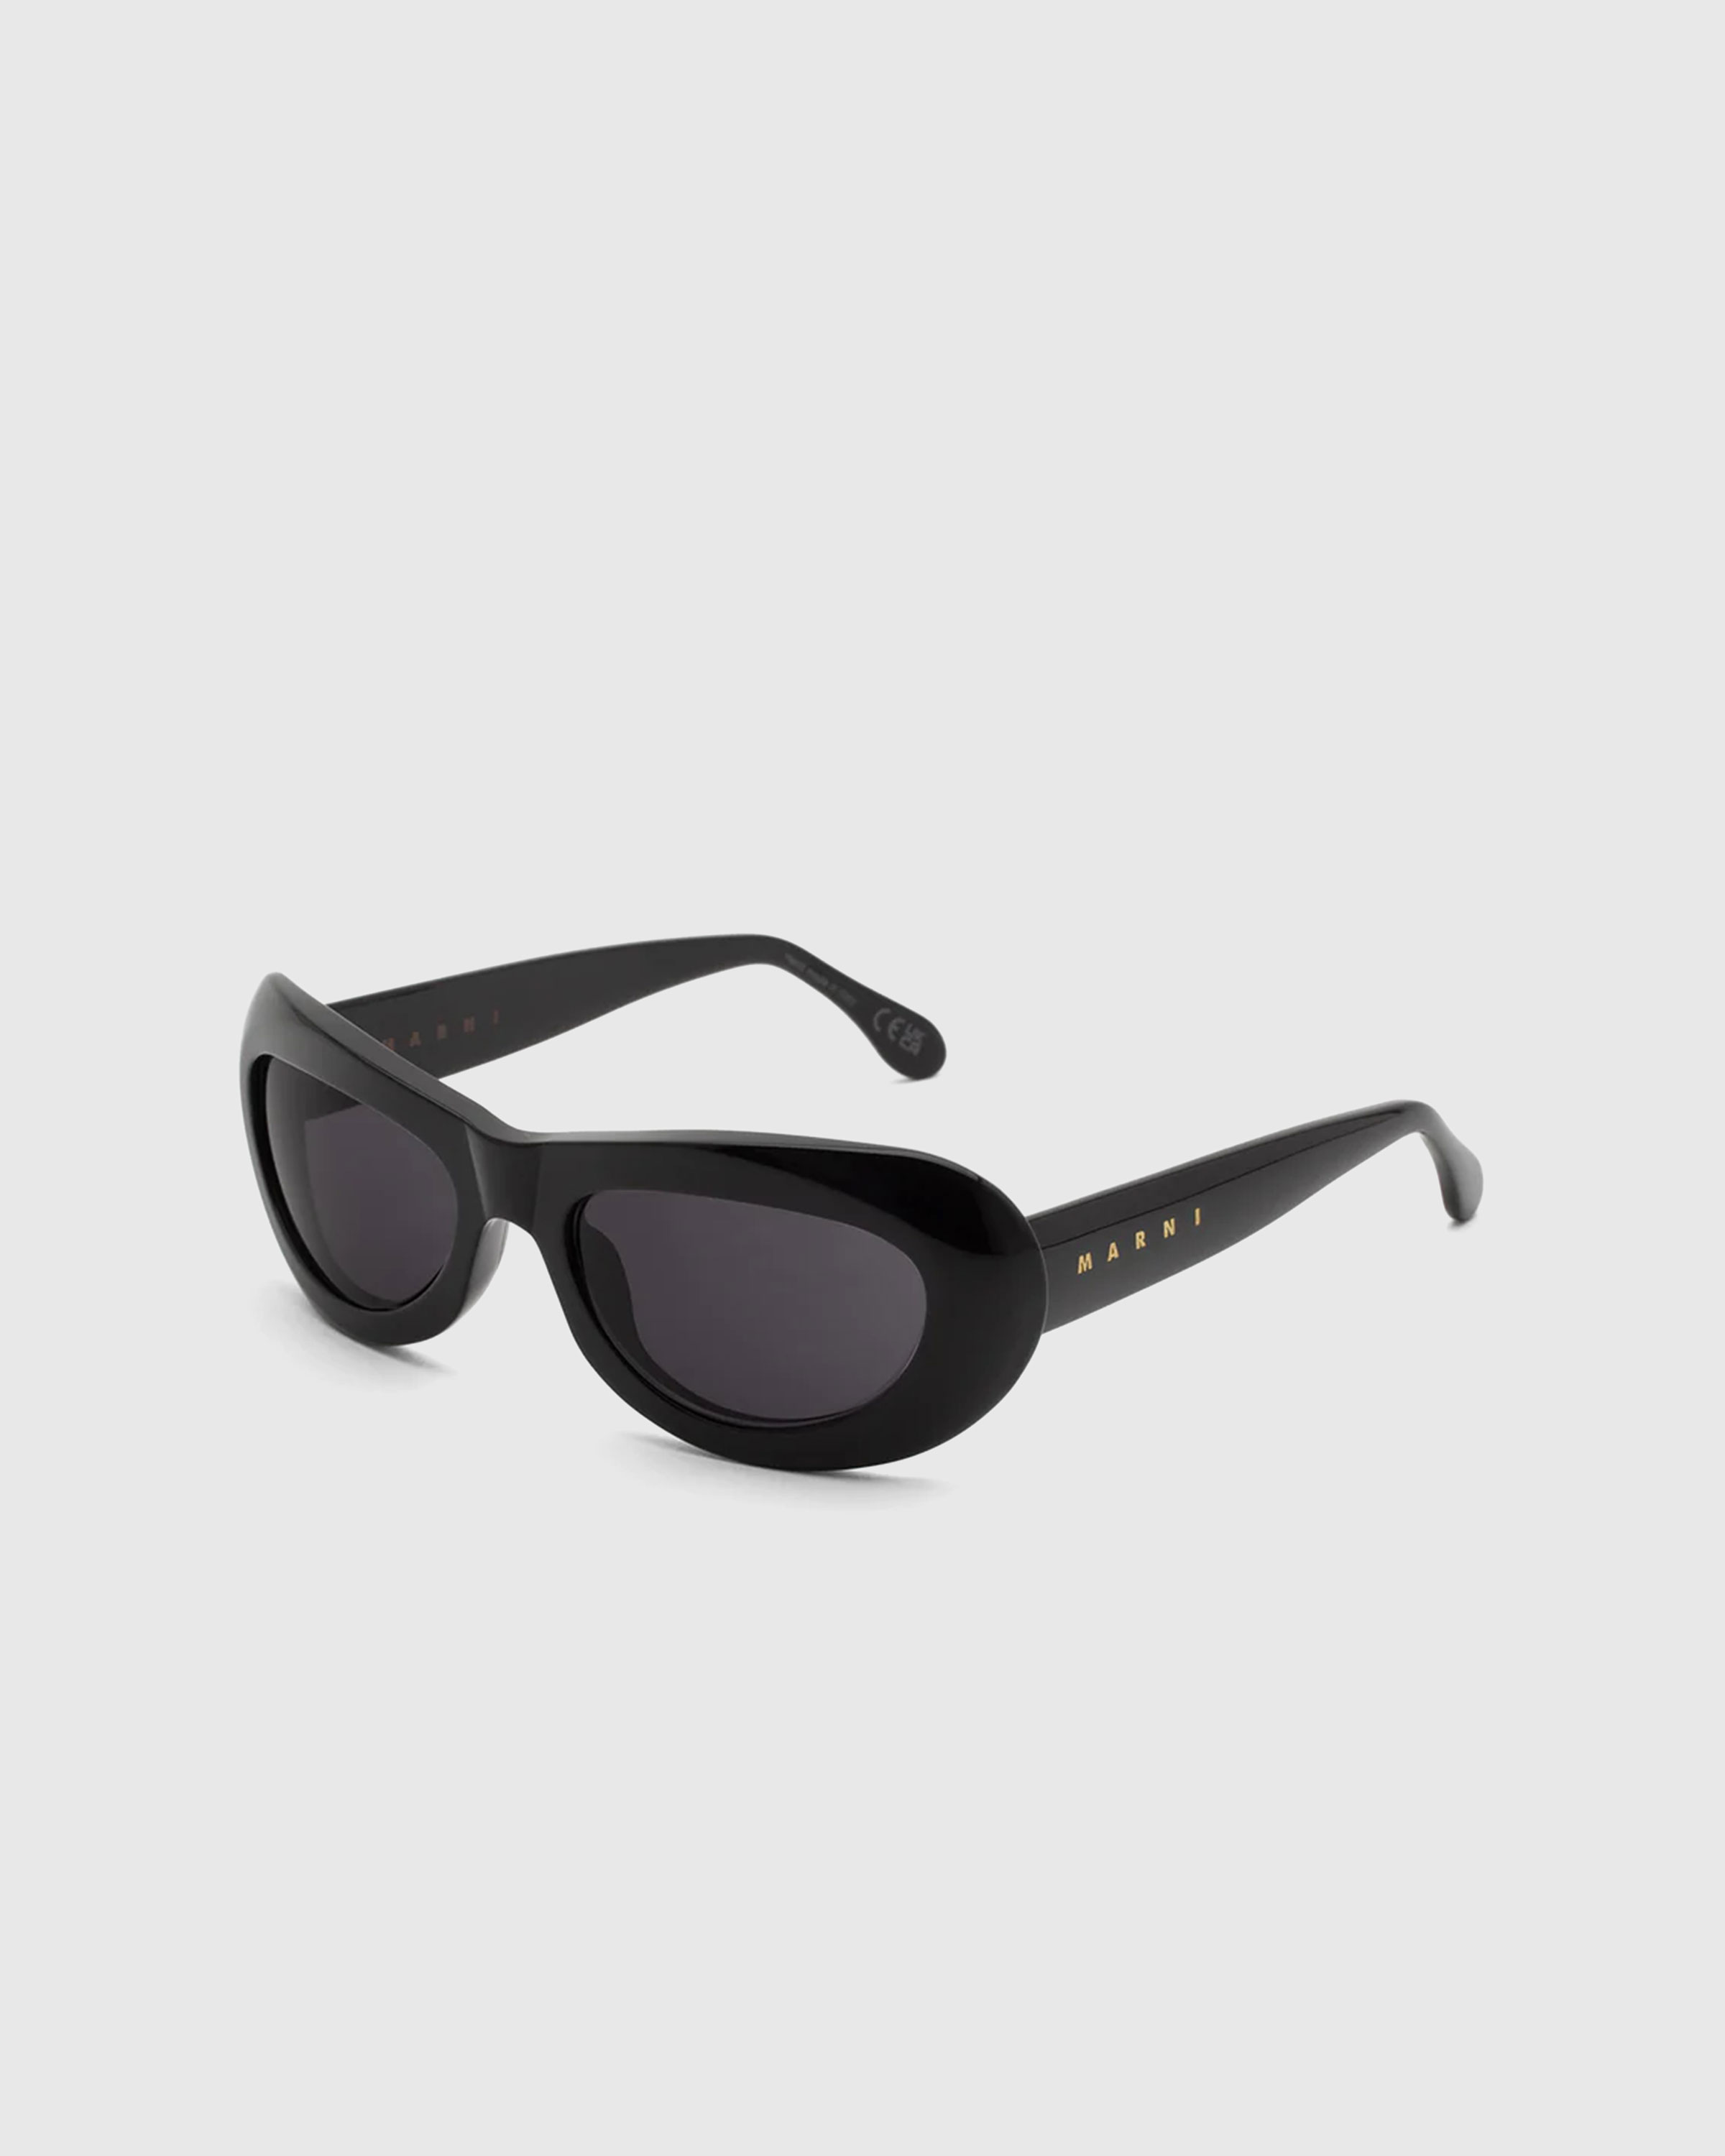 Marni x retrosuperfuture – Field Of Rushes Black - Sunglasses - Black - Image 3